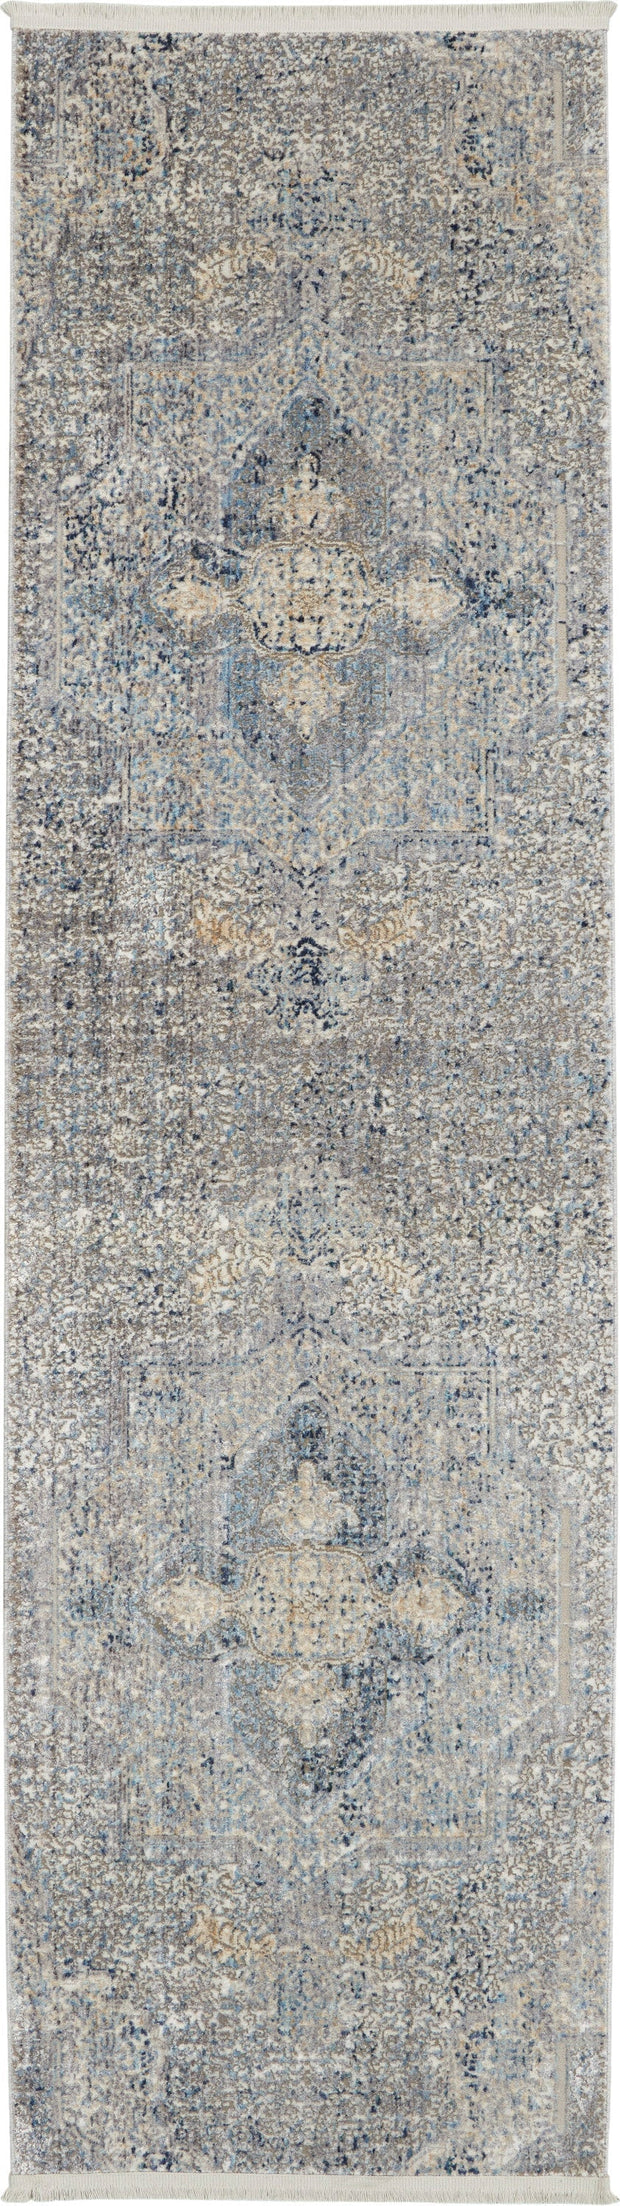 lustrous weave blue grey rug by nourison 99446752277 redo 2